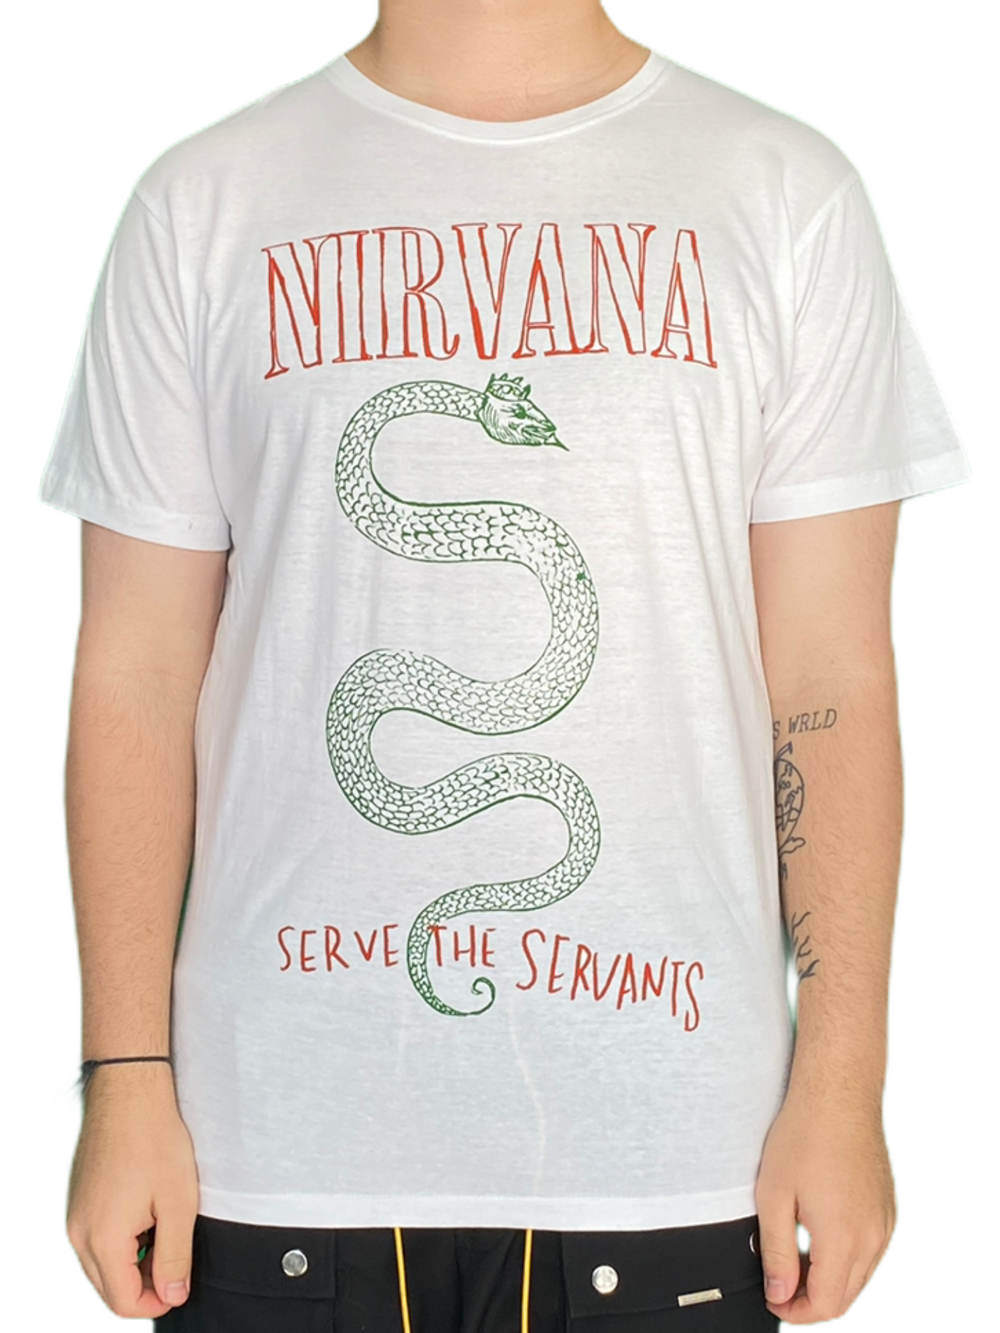 Nirvana Serpent Snake Unisex Official T Shirt Brand New Various Sizes